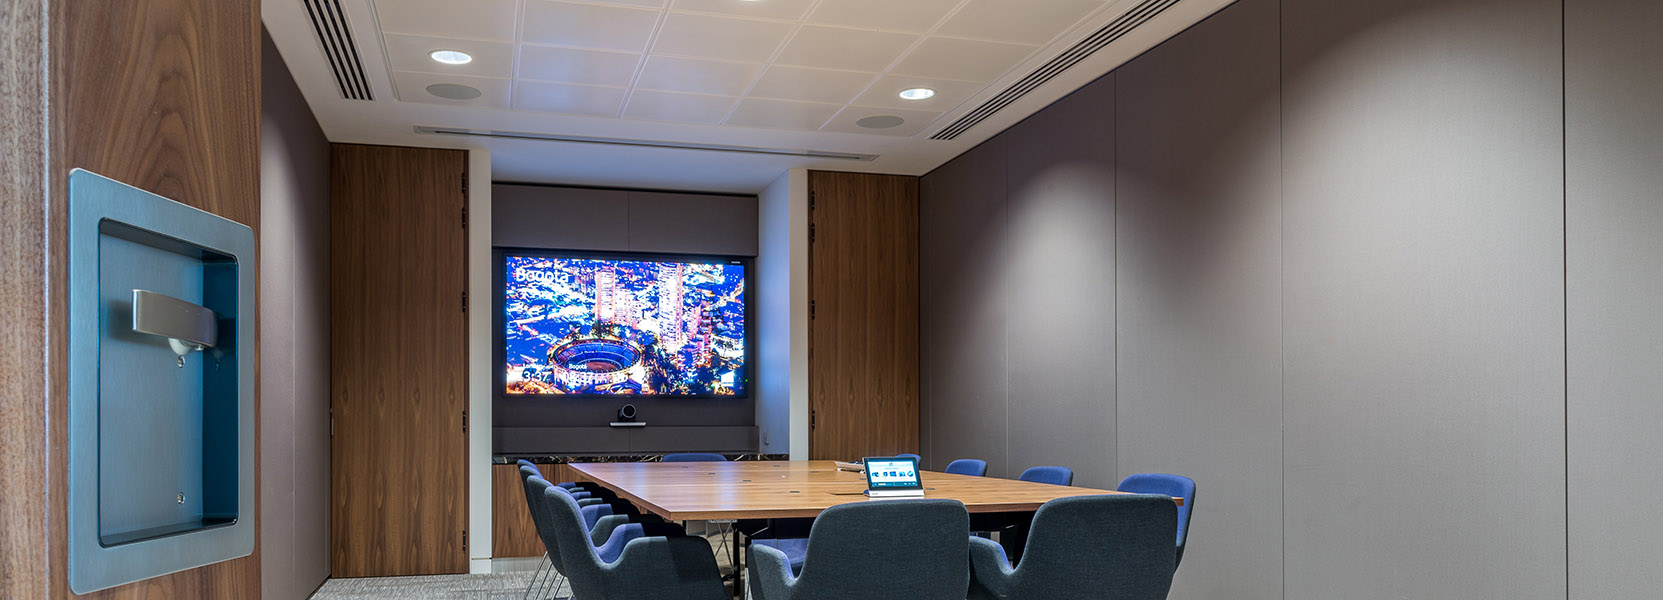 SAS130 Ceiling System Meeting Room